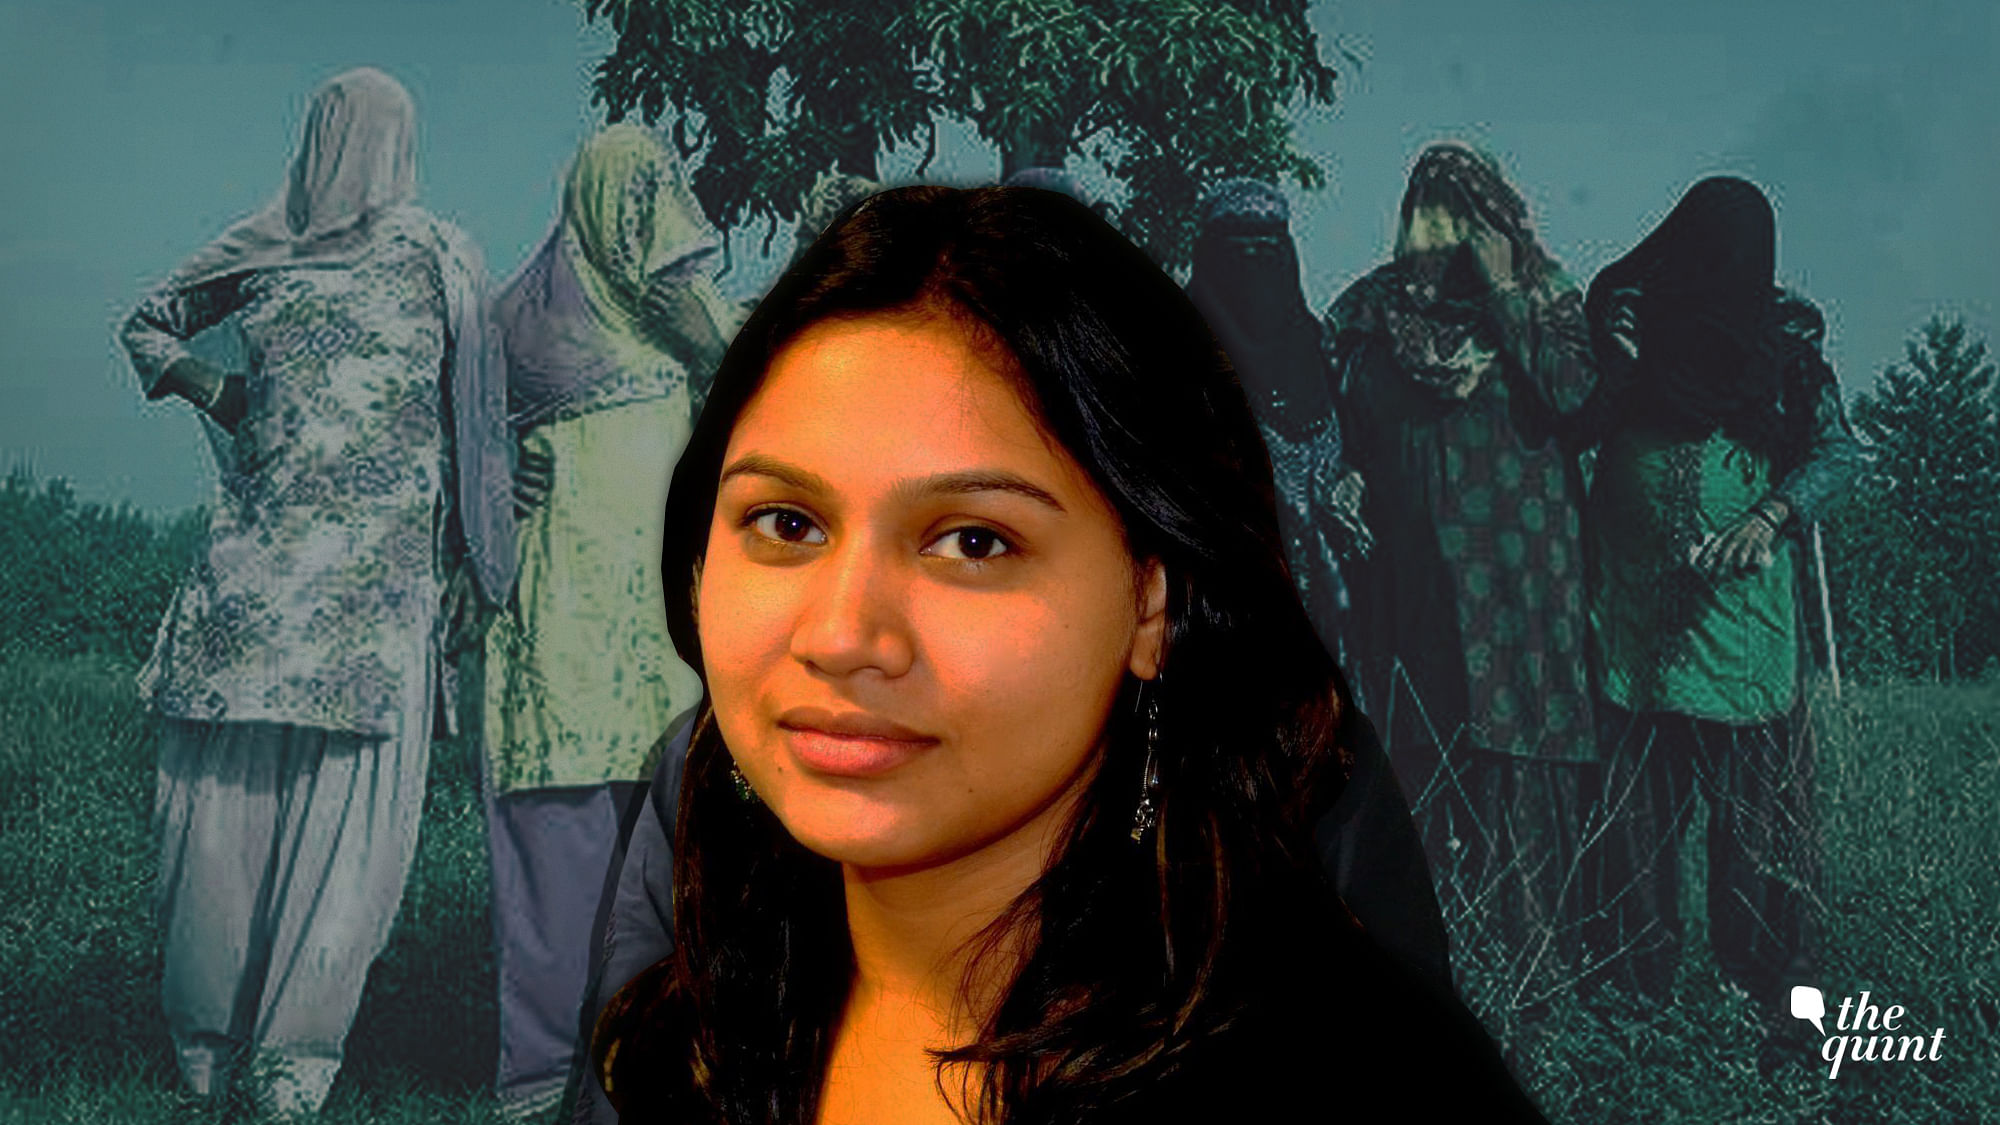 Independent journalist Neha Dixit reported on Muzaffar Riots in 2013.&nbsp;